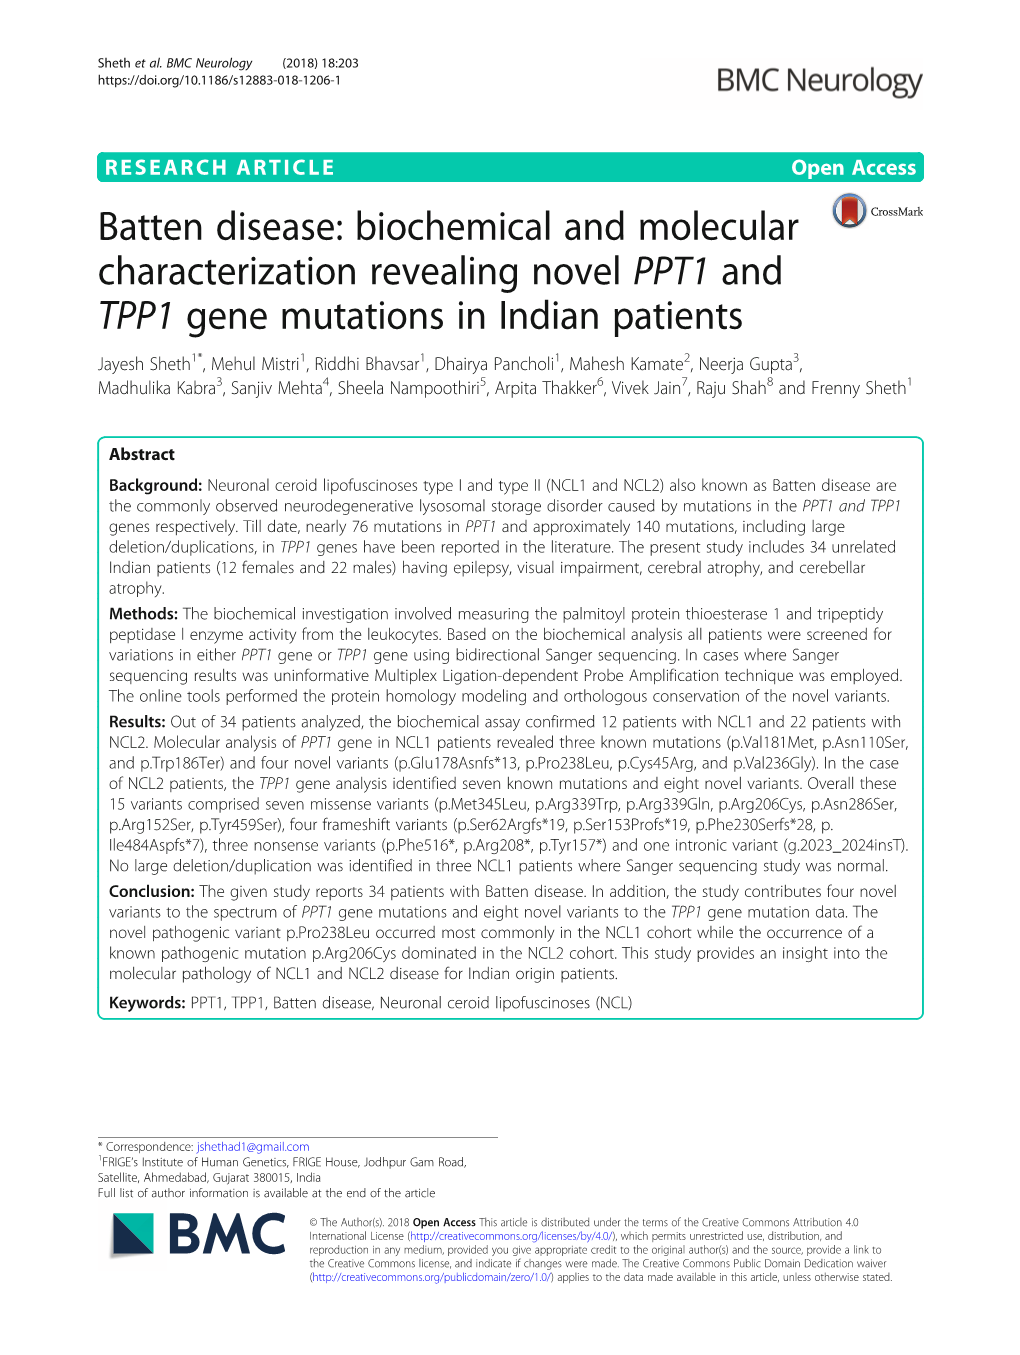 Batten Disease: Biochemical and Molecular Characterization